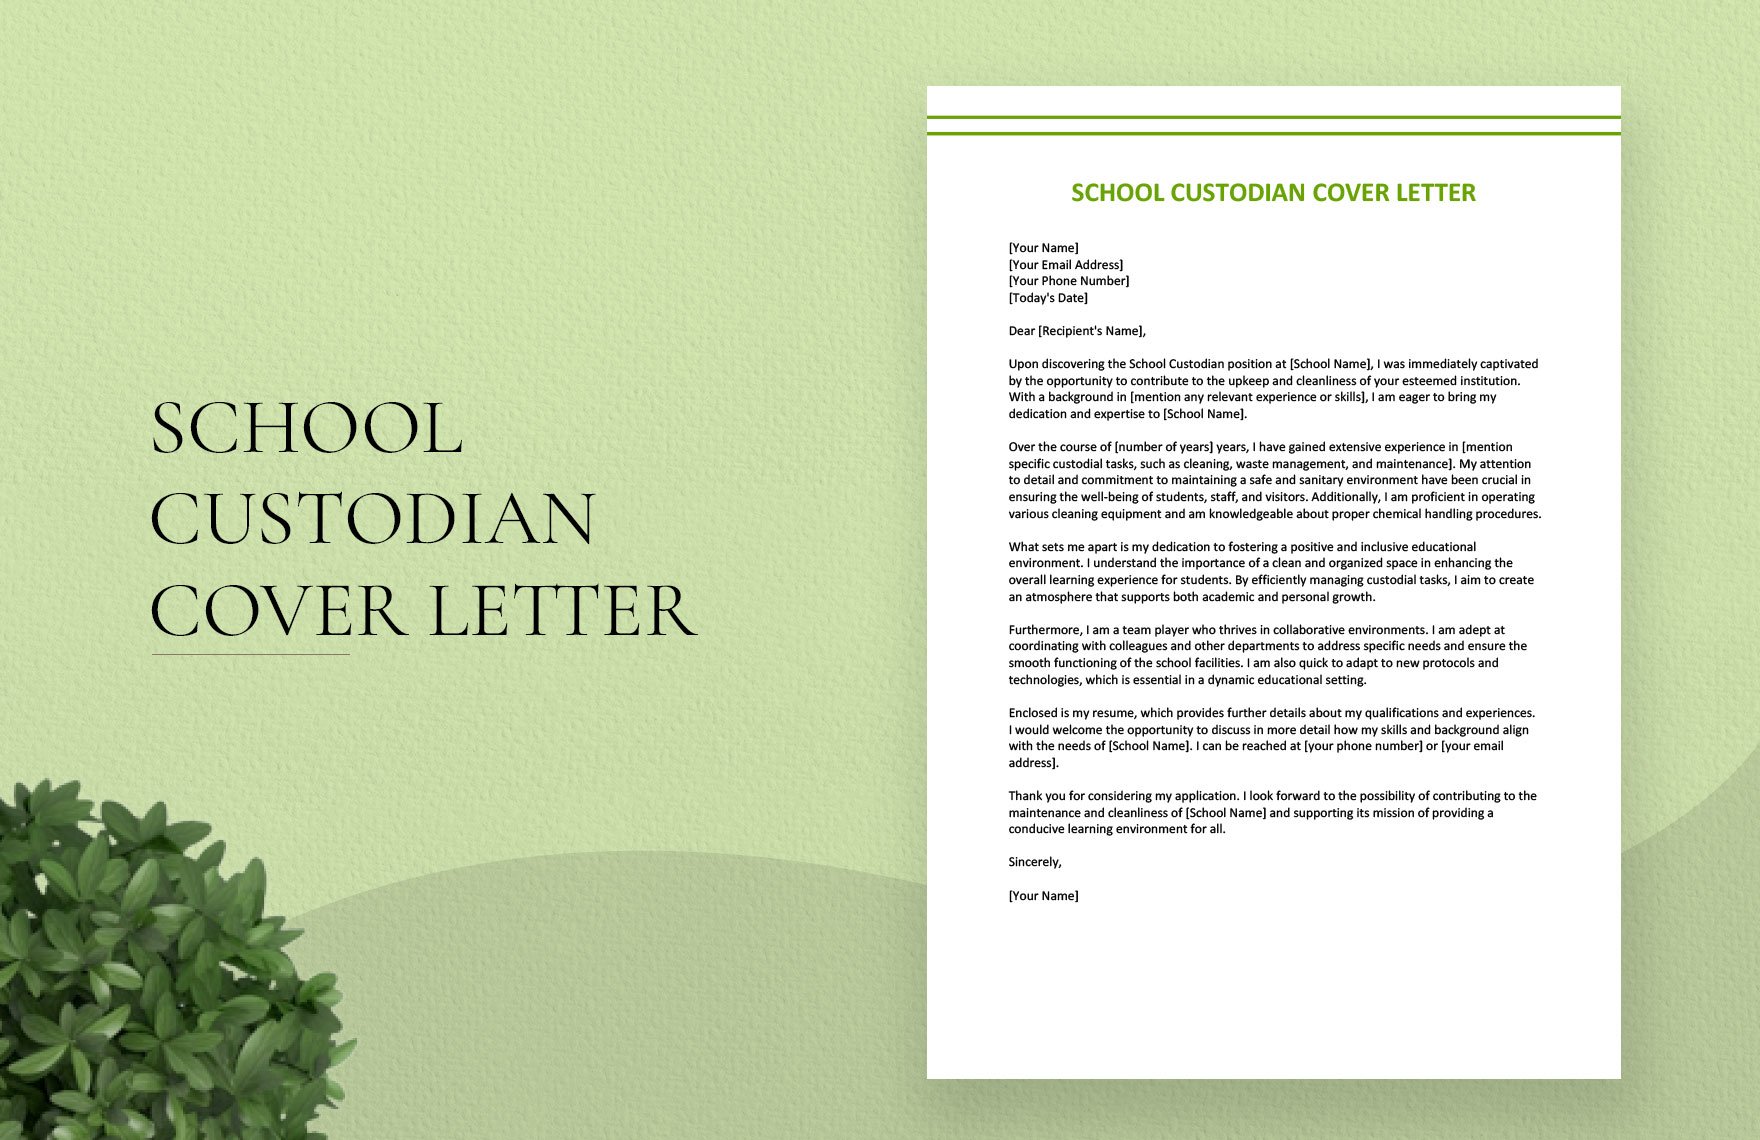 School Custodian Cover Letter in Word, Google Docs